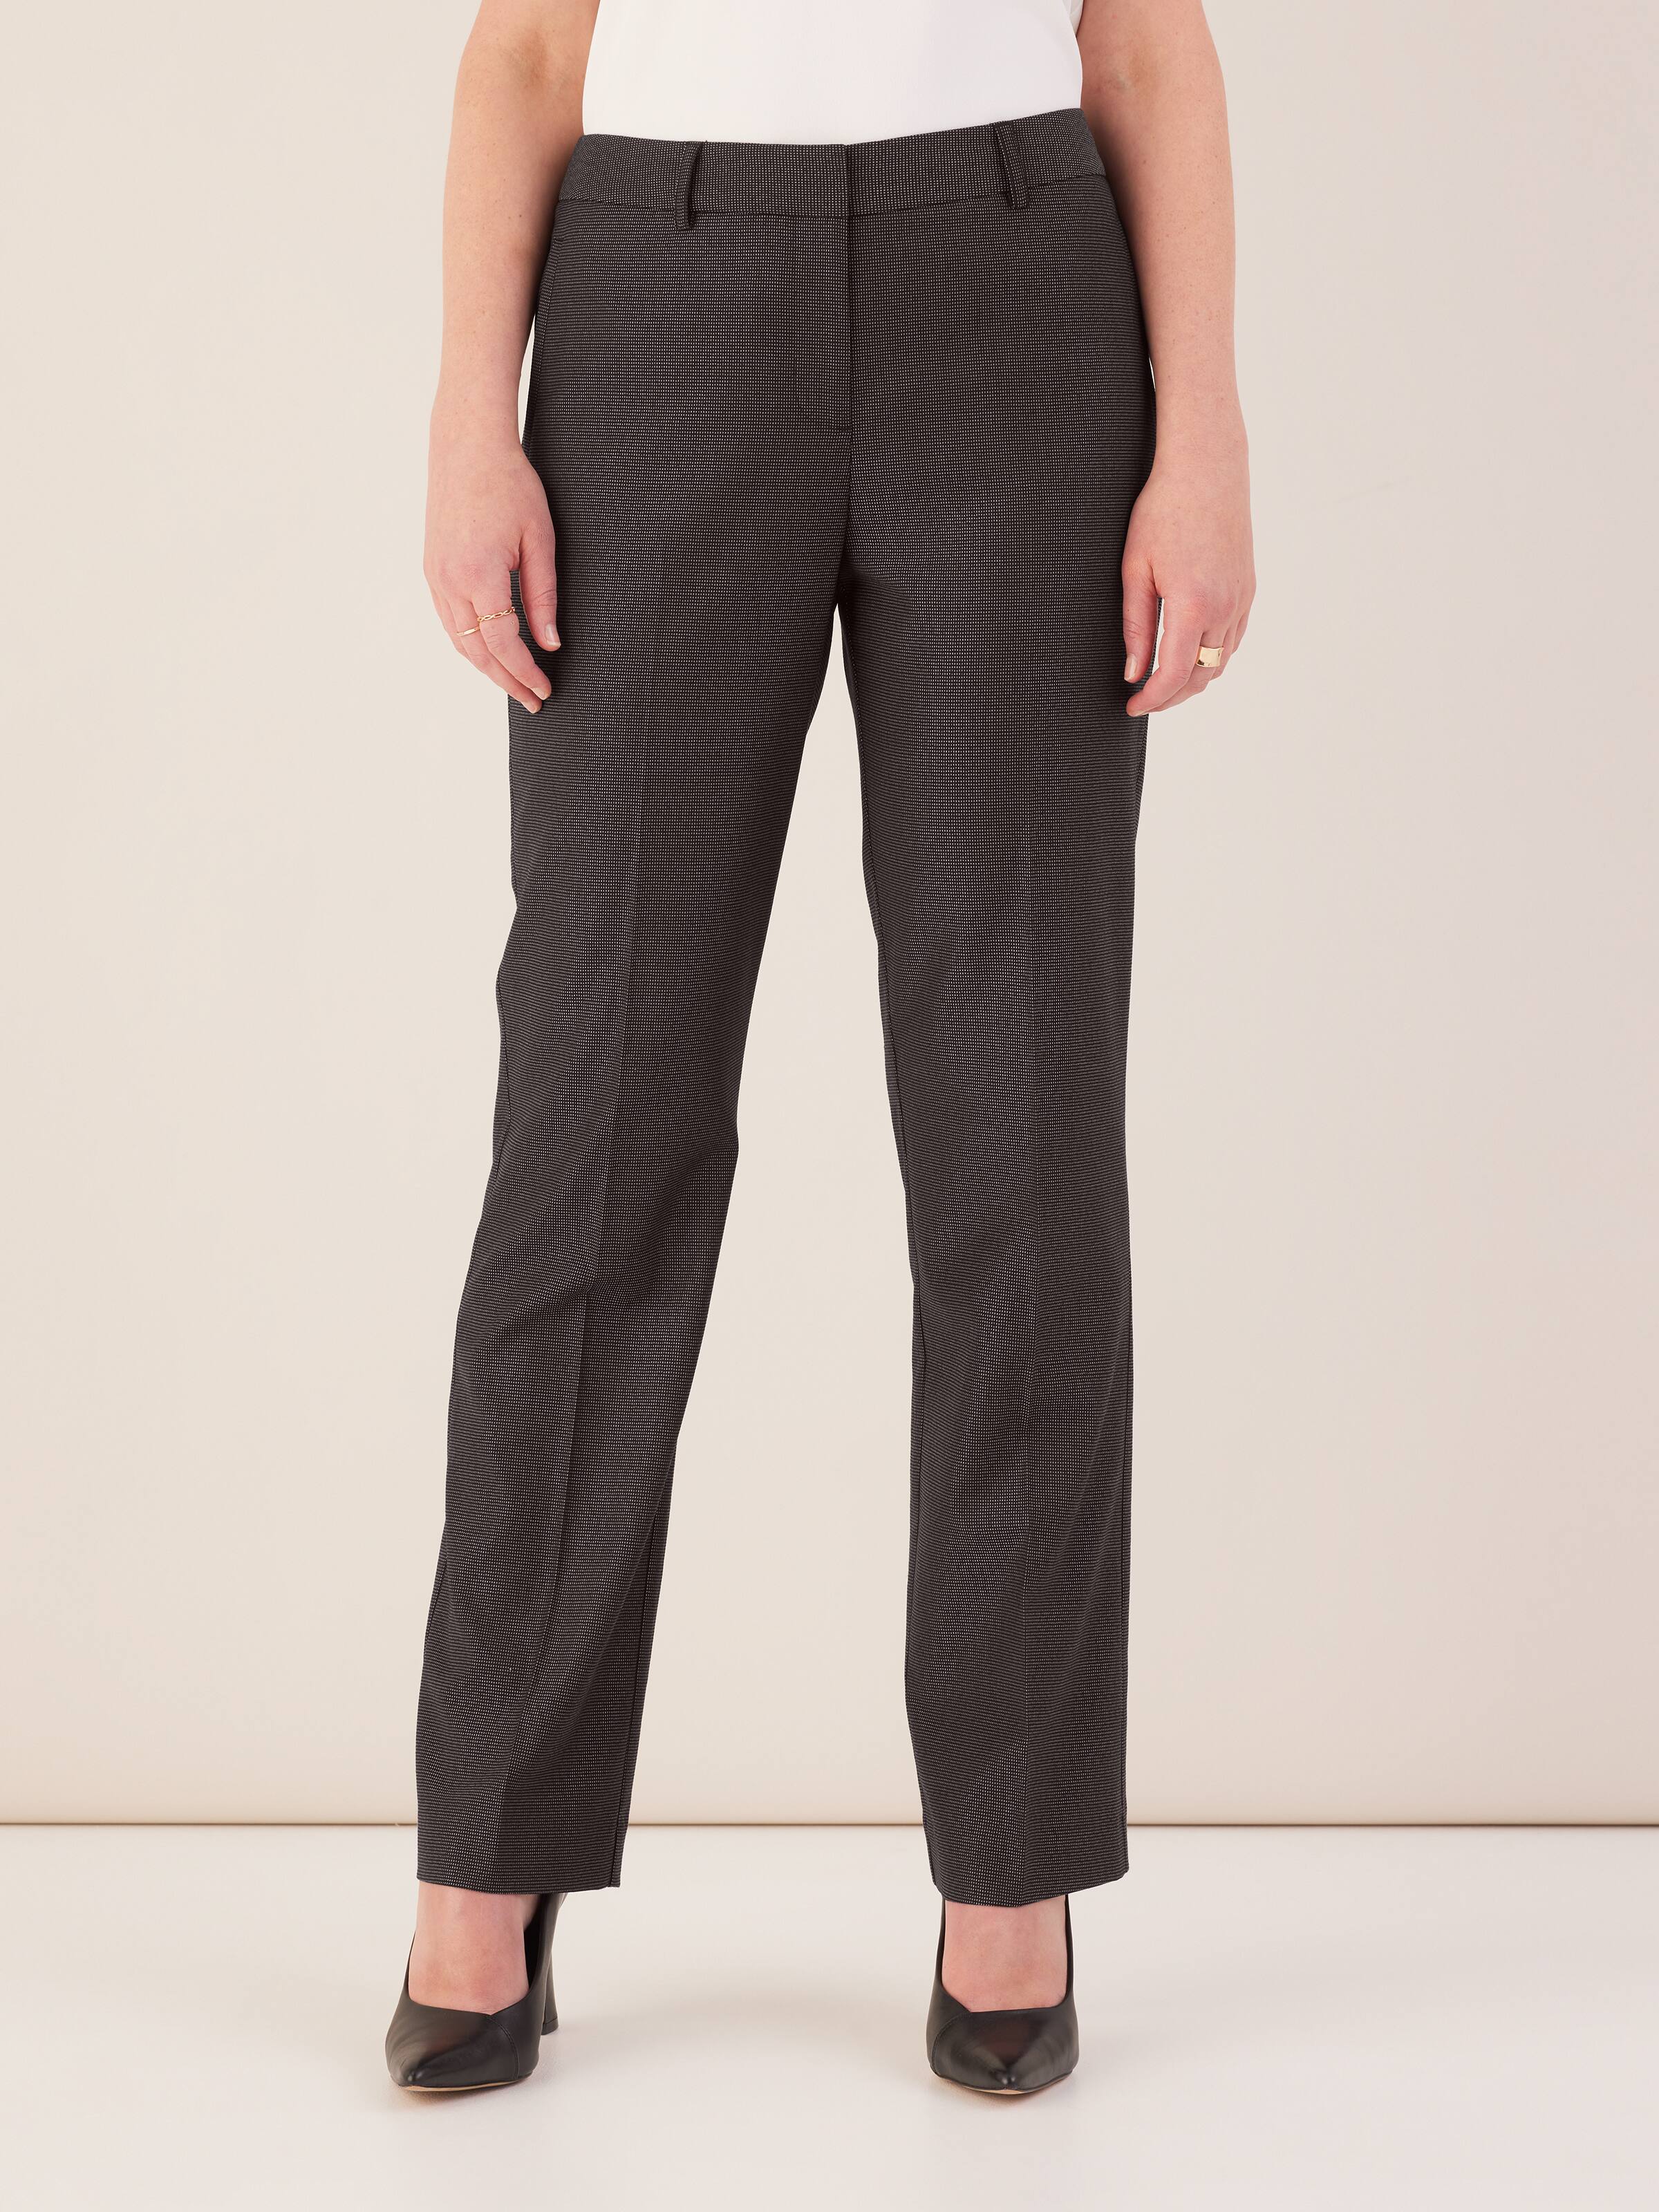 Suzanne Grae Ladies Fashion 3/4 Capri Pants sizes XS Small Medium Large  White